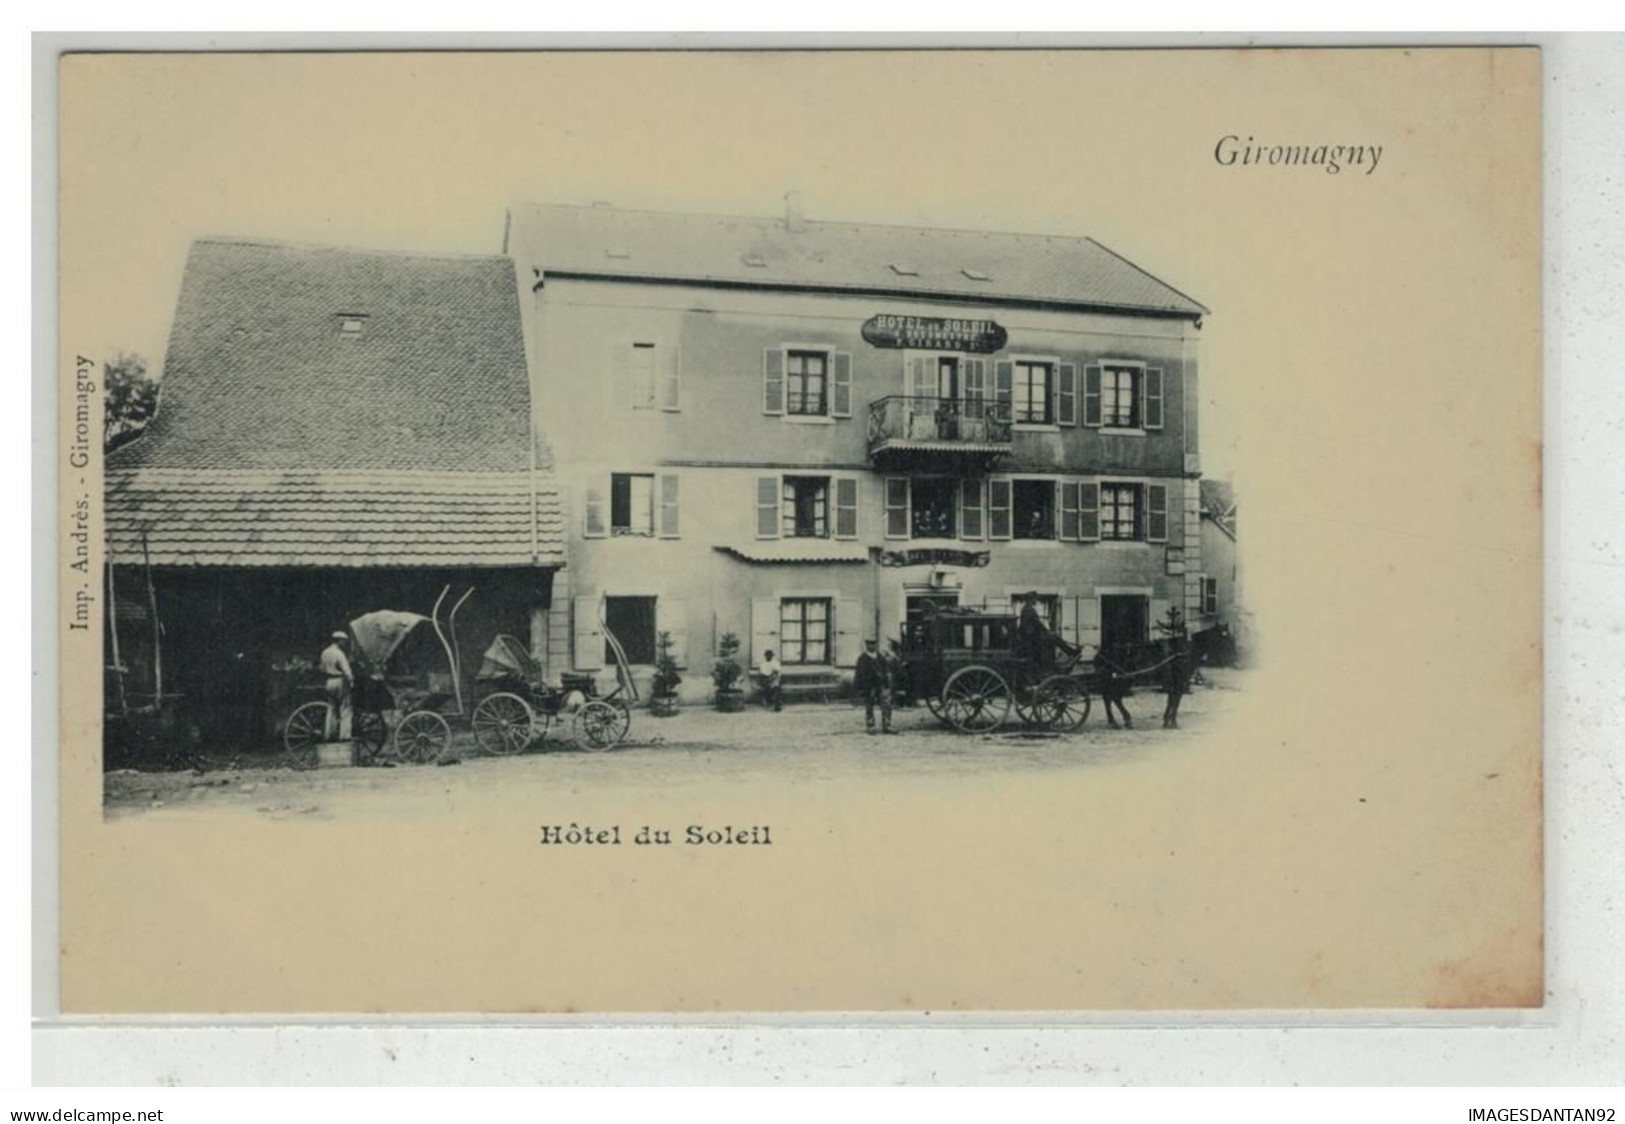 90 GIROMAGNY #19264 HOTEL DU SOLEIL PROP. GIRARD - Giromagny